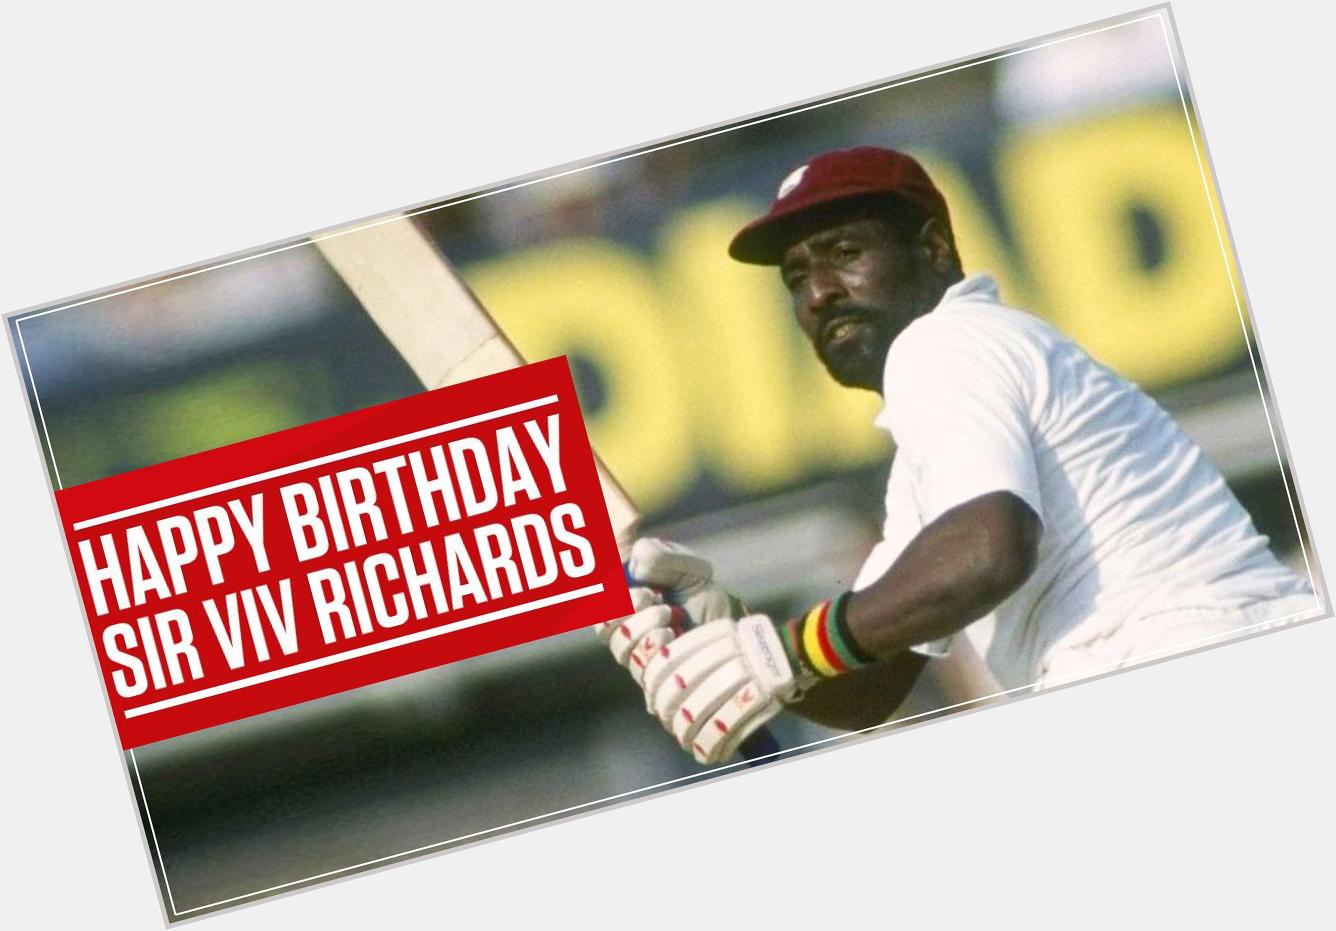 Voted by Wisden as the greatest ODI batsman of all time, Happy Birthday Sir Viv Richards AKA The Master Blaster. 